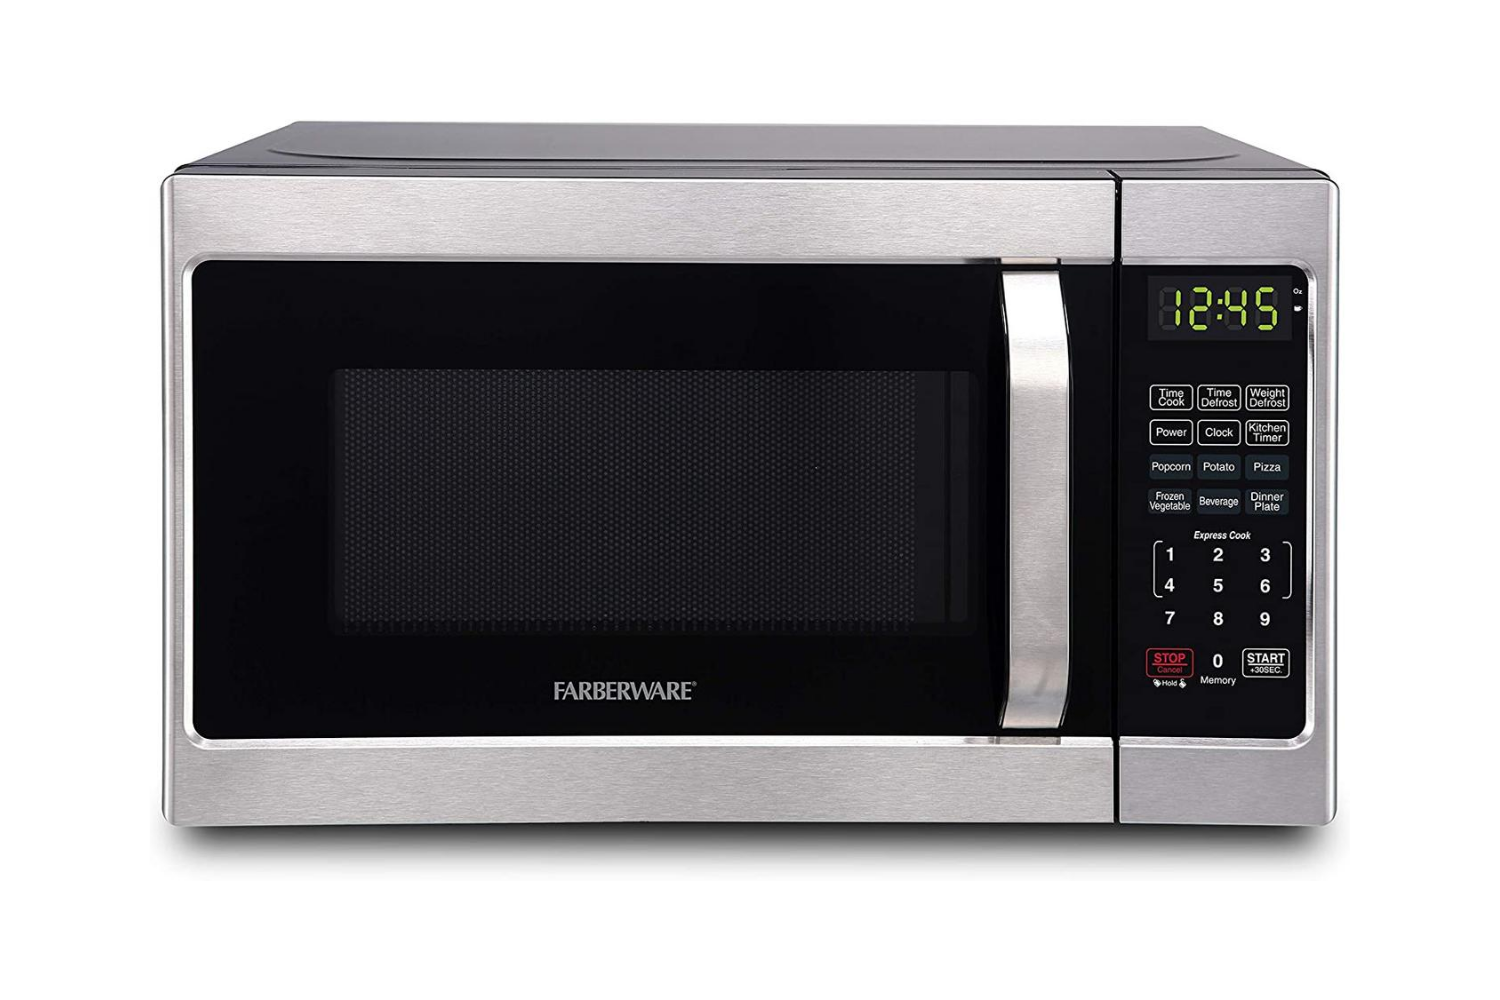 Farberware Classic Microwave Oven (FMO07AHTBKJ)